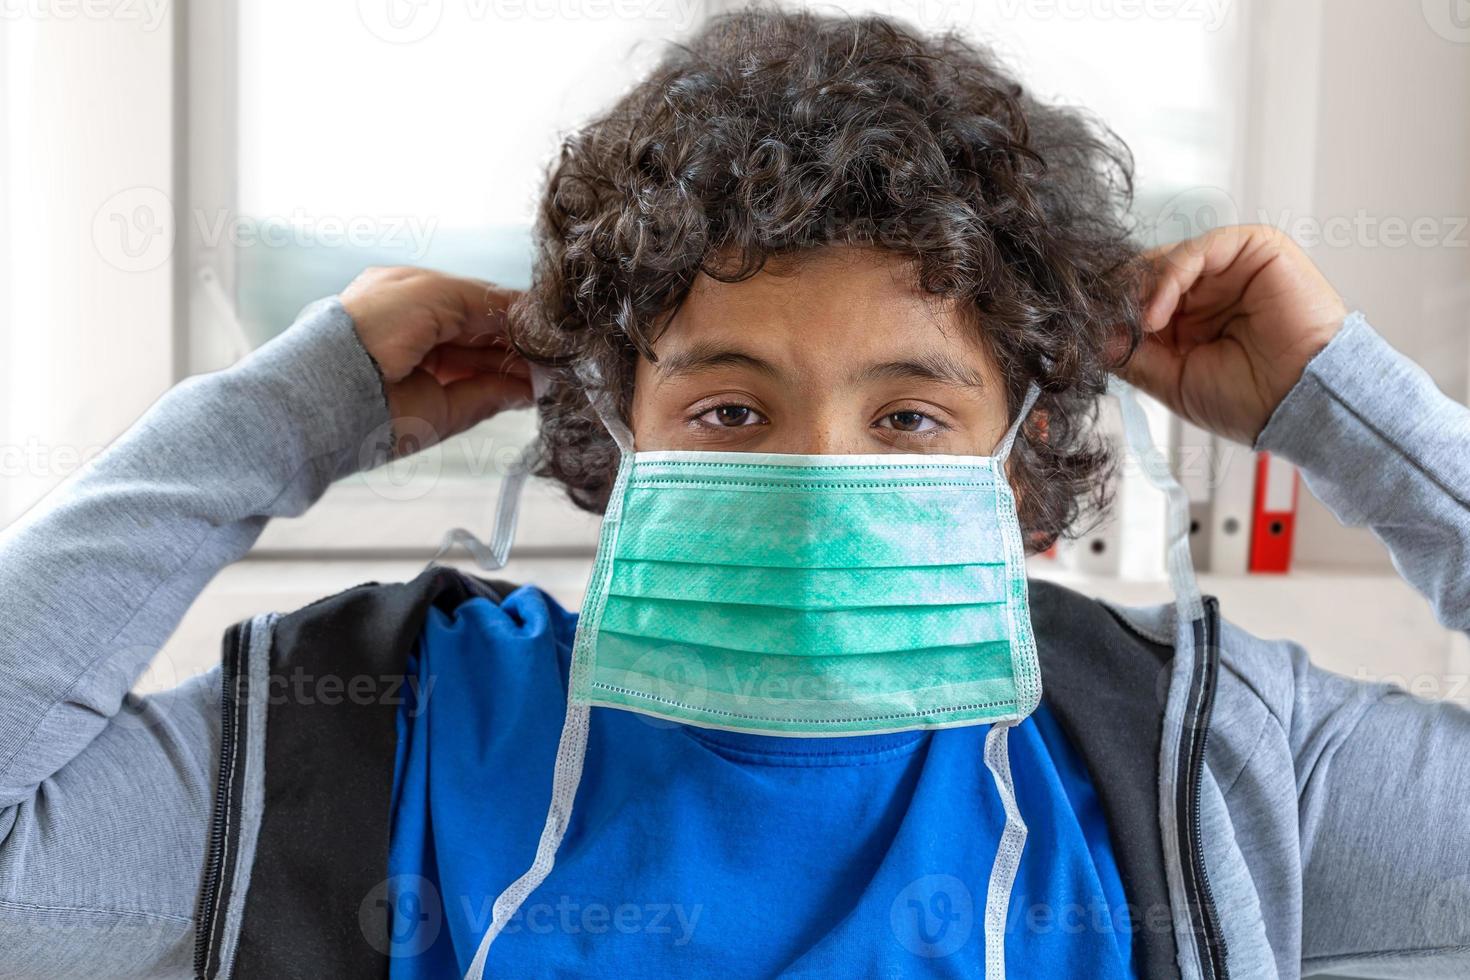 menino segura uma máscara protetora médica contra a epidemia de vírus máscara facial coronavírus gripe para proteção foto